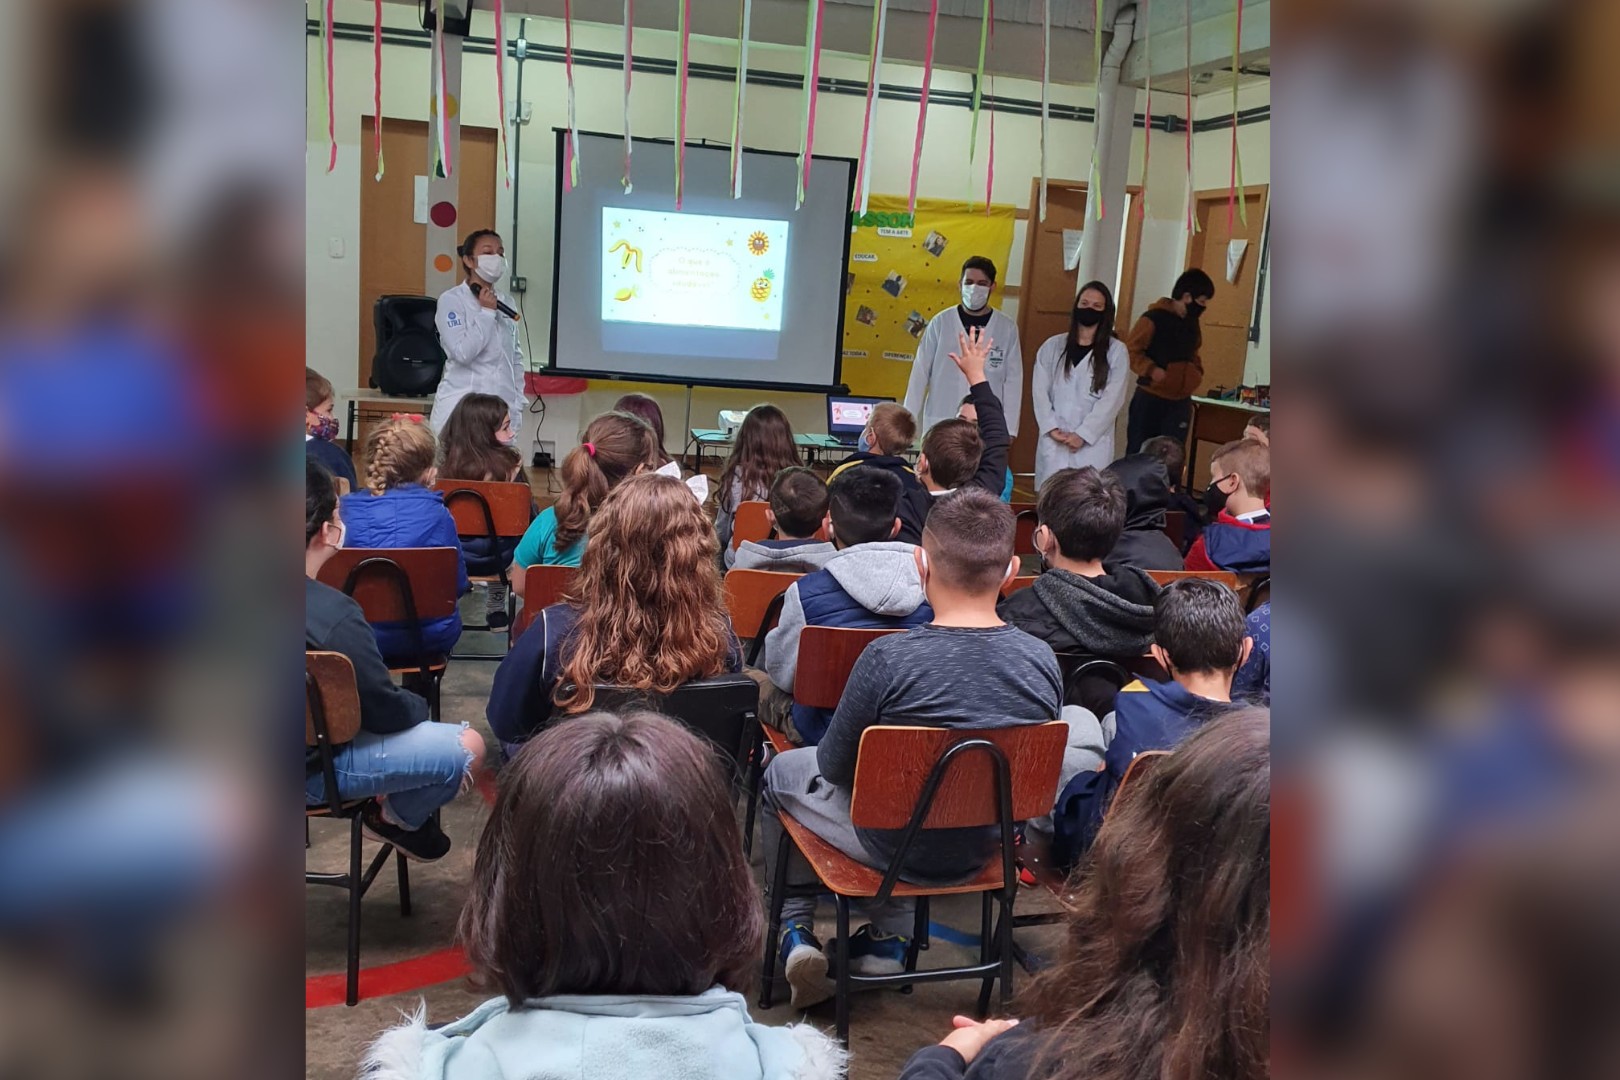 Palestra teve lugar na Escola Estadual de Ensino Fundamental Dr. José Vicente da Maia